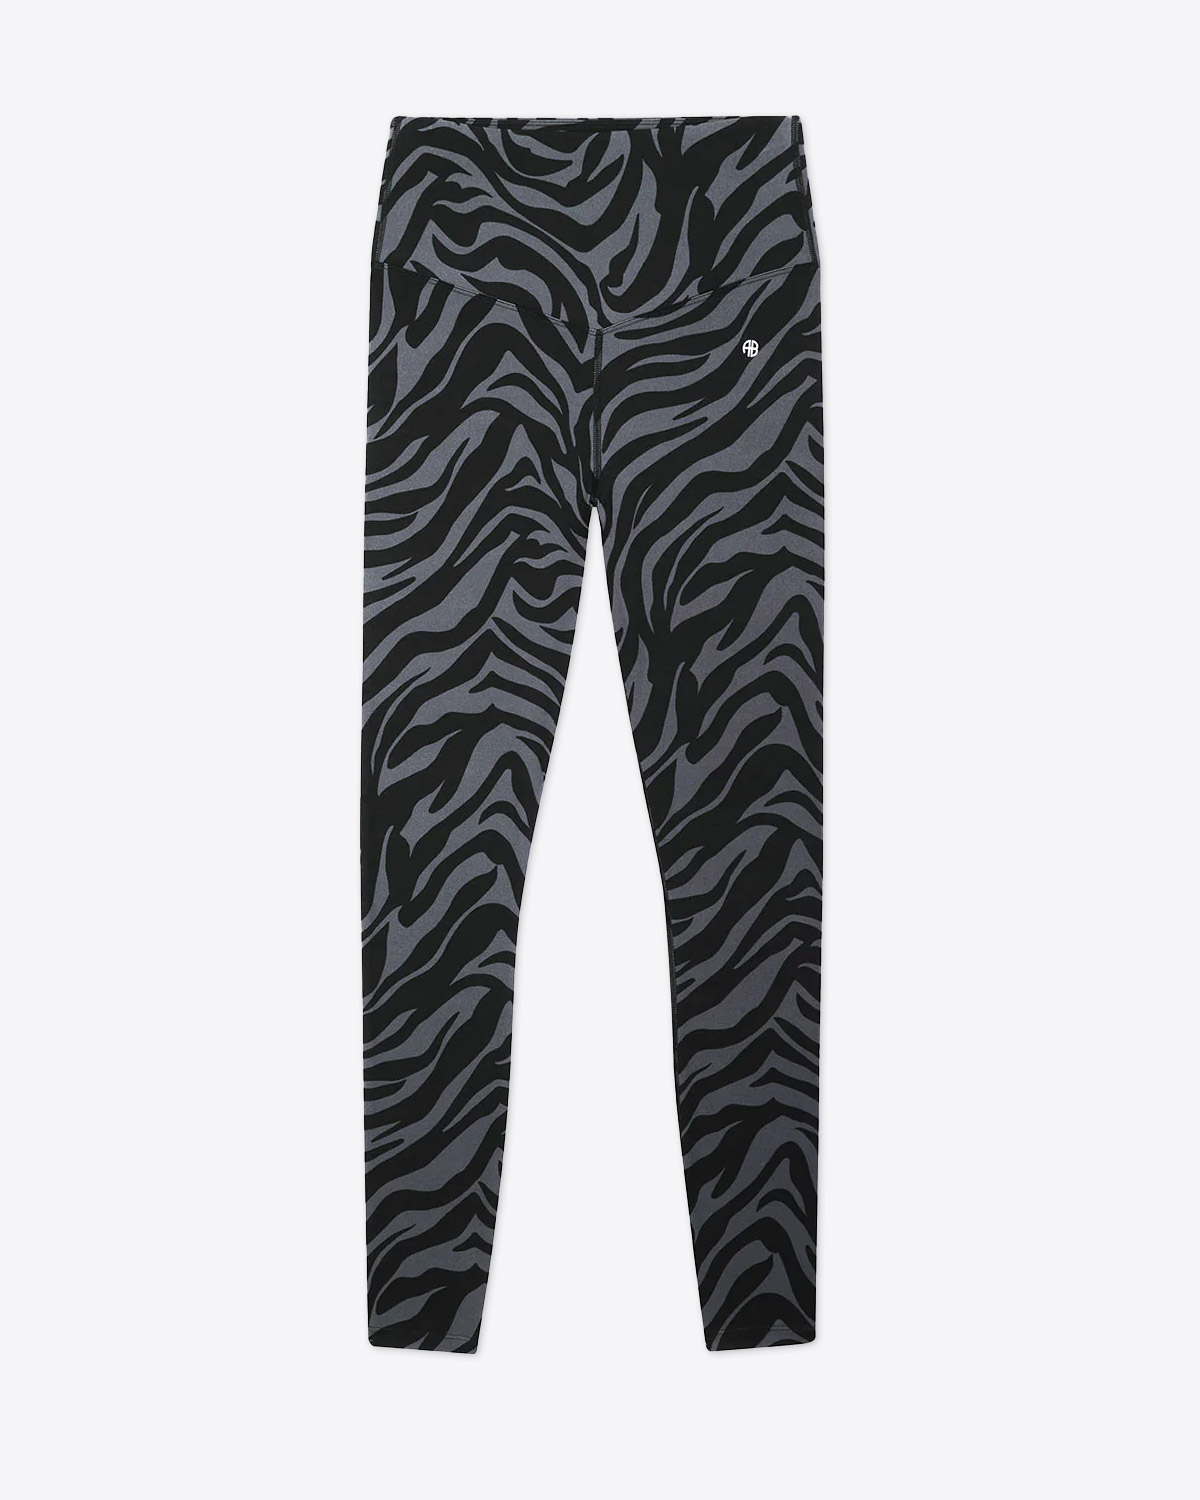 High Waist Leggings Charcoal Zebra